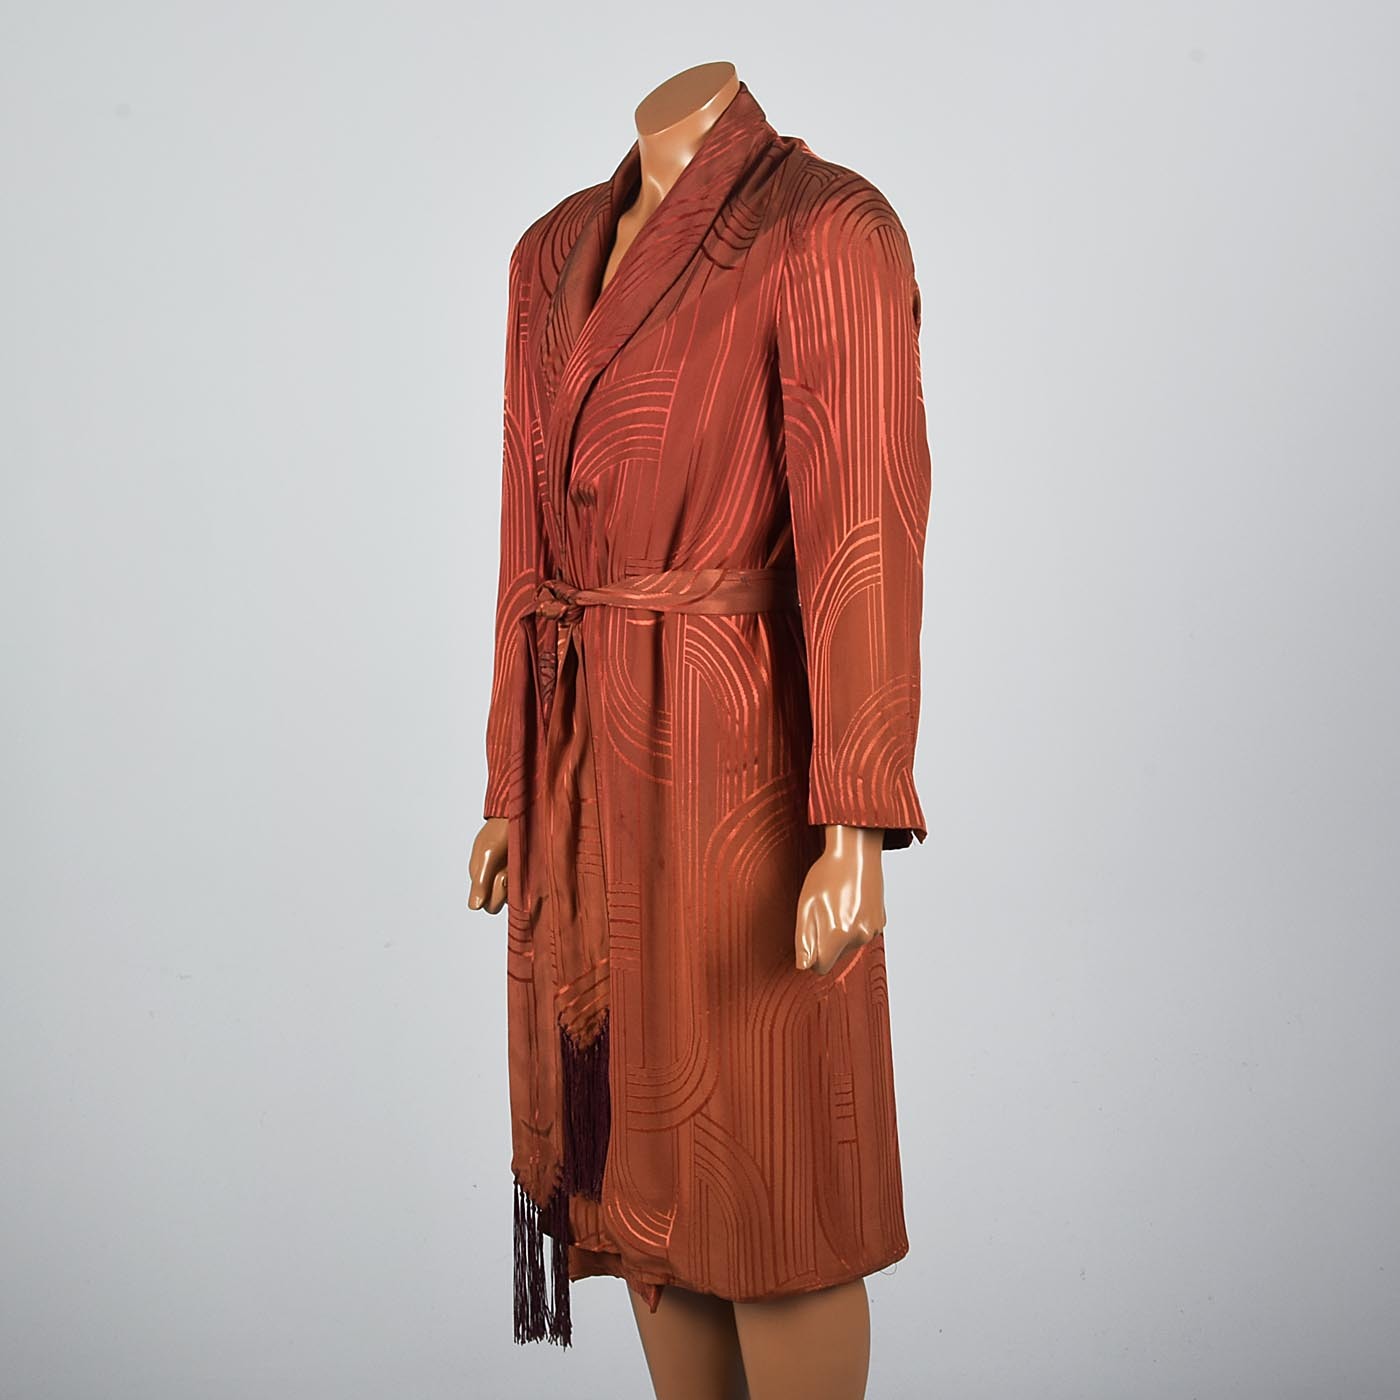 1930s Men's Art Deco Robe